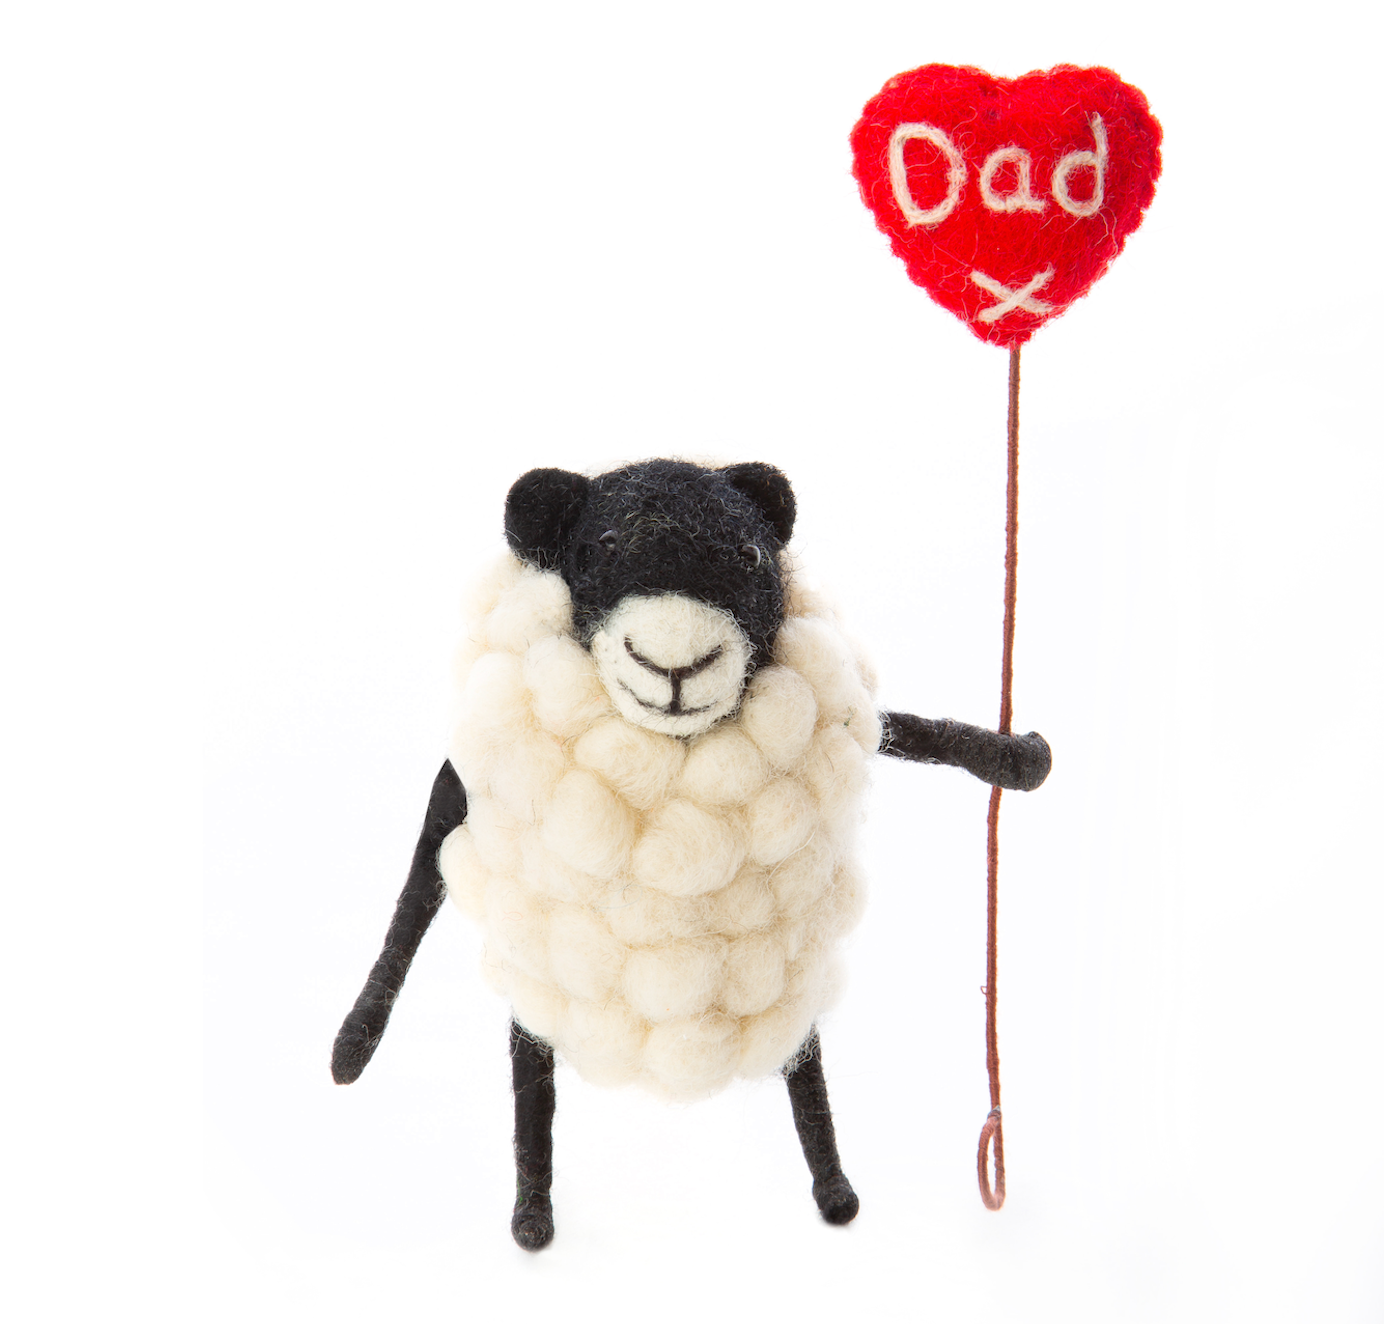 Dad Balloon Sheep